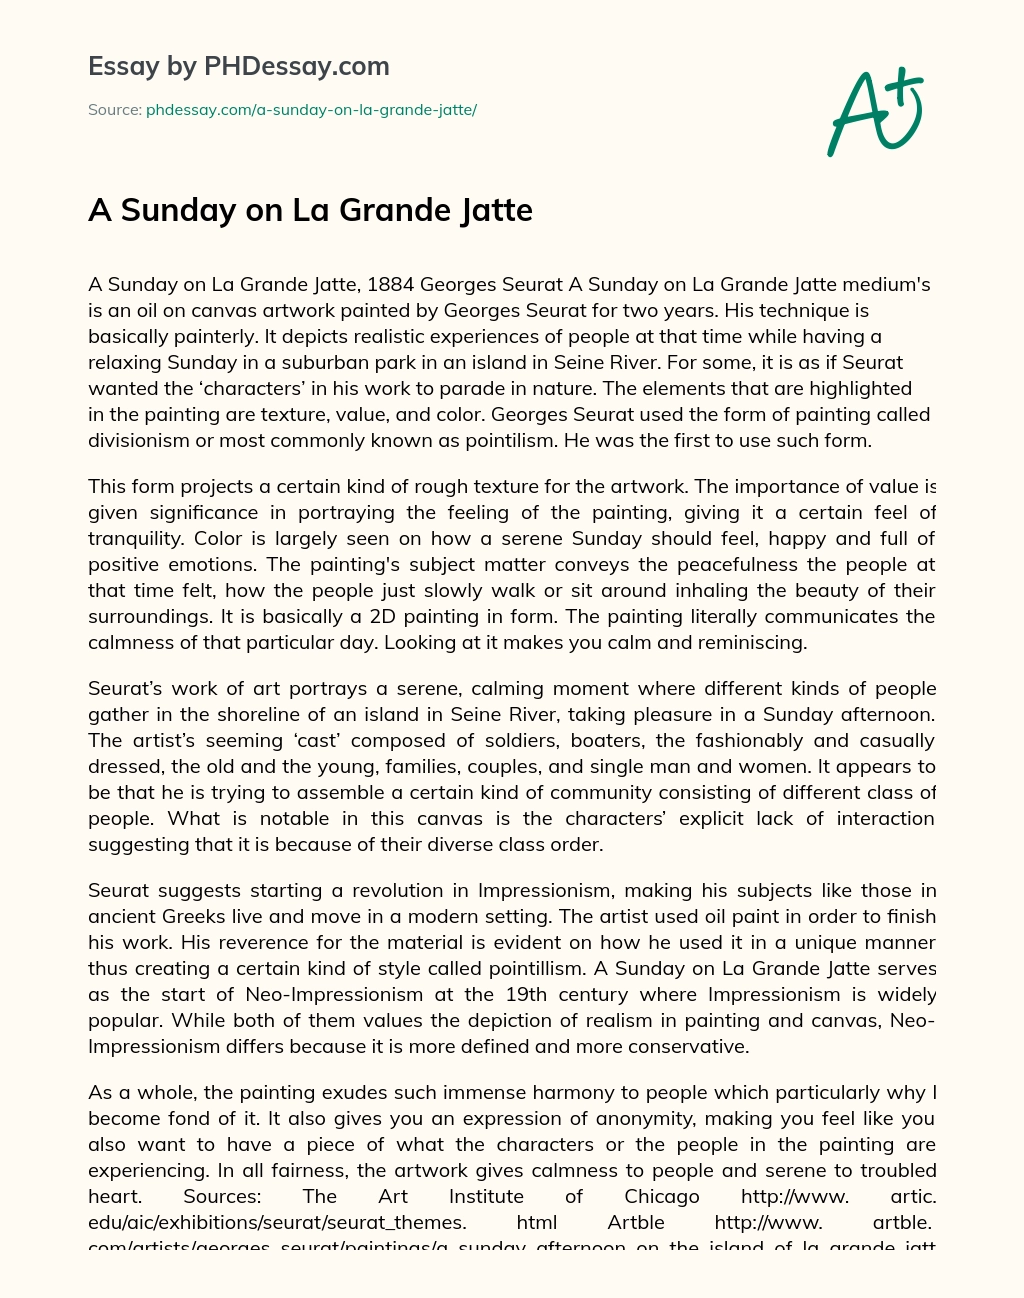 A Sunday on La Grande Jatte essay